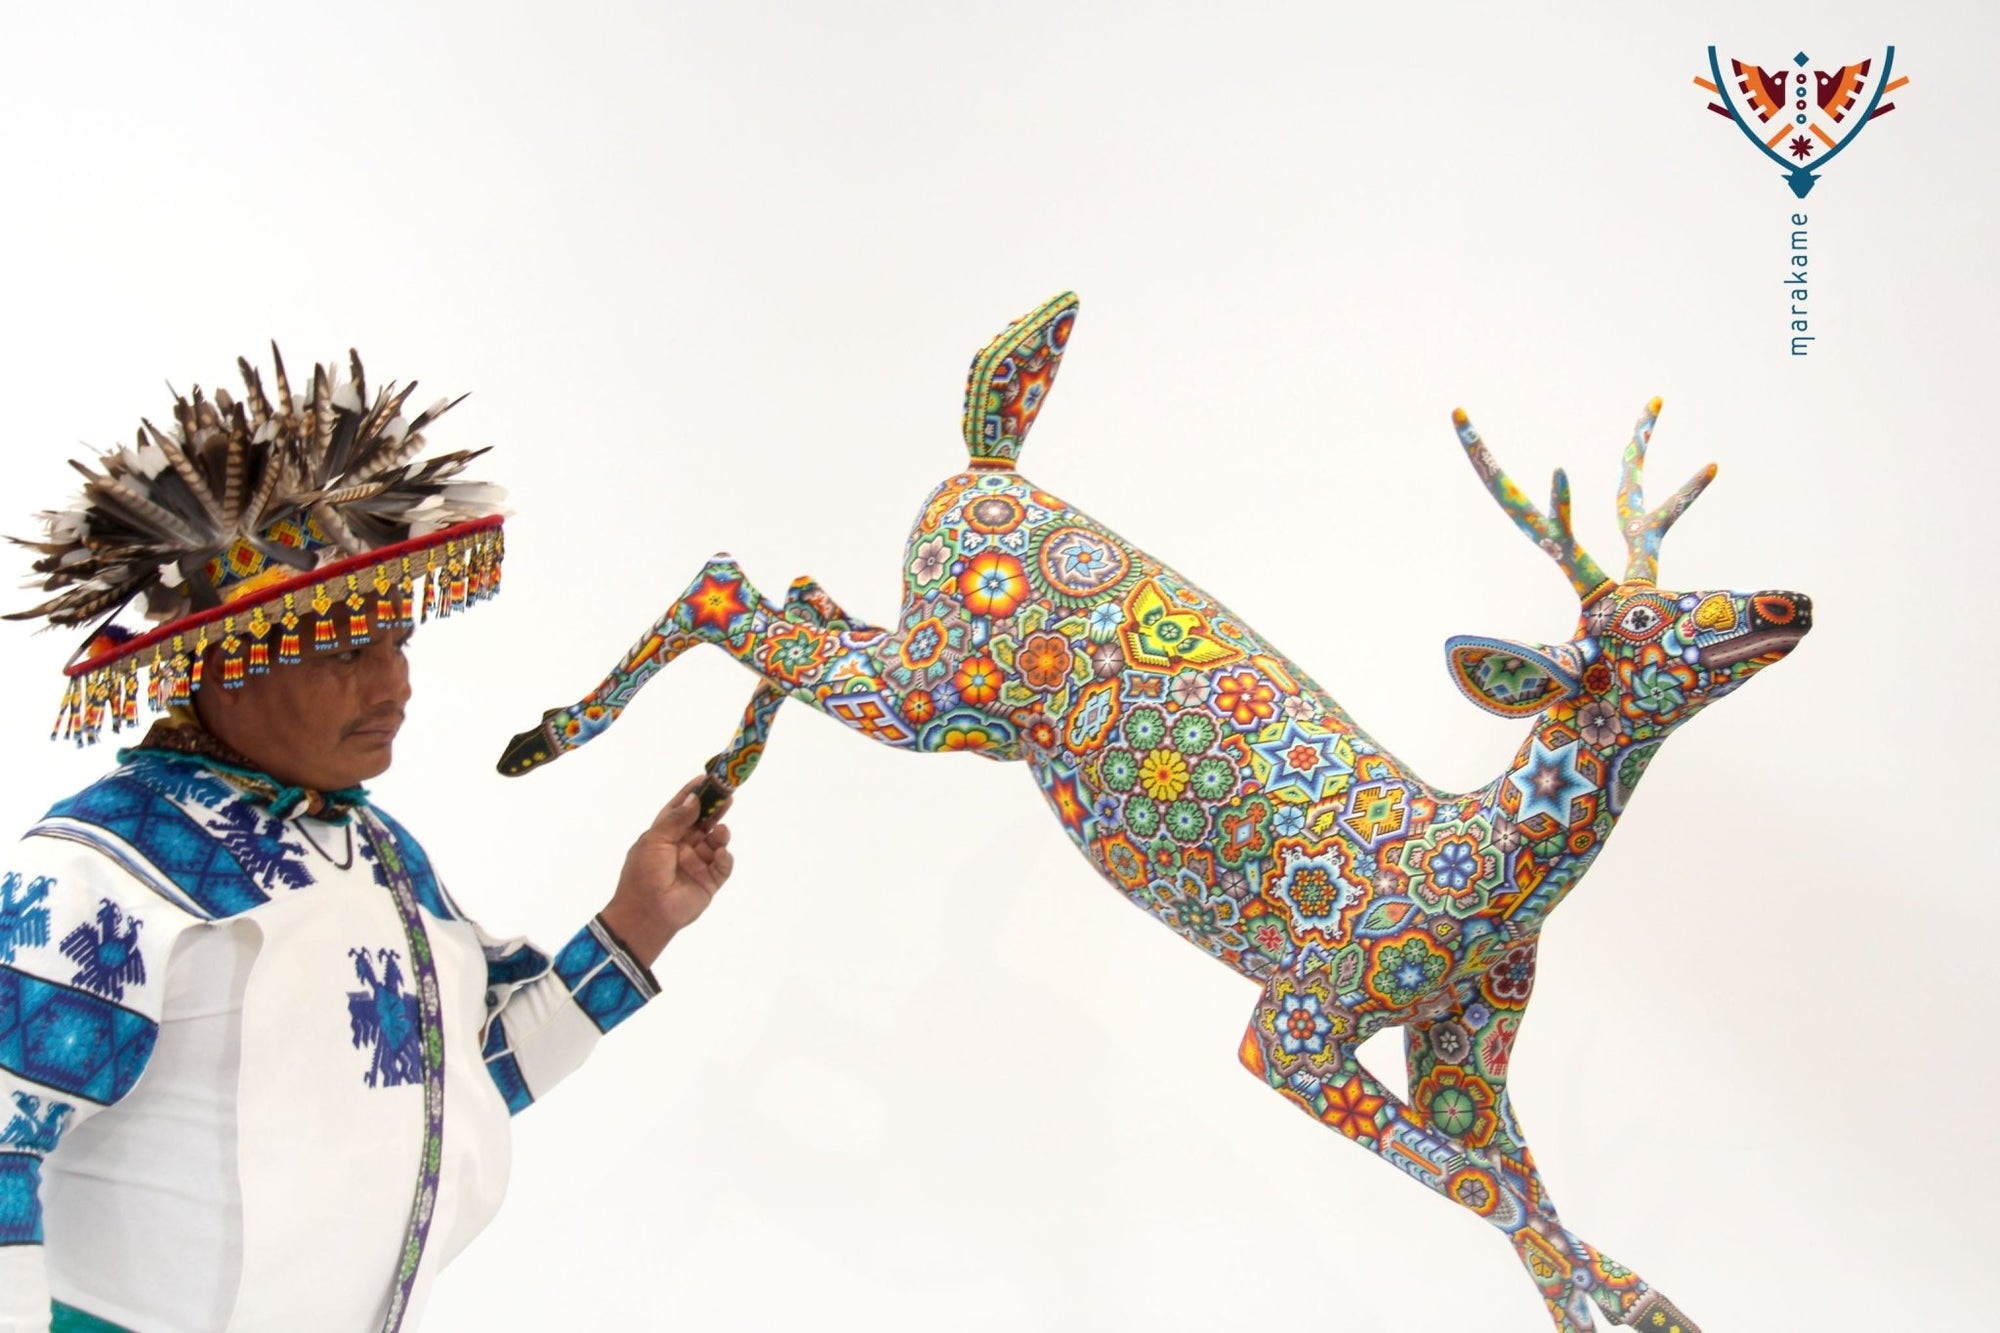 Escultura Arte Huichol - Venadito saltando - Maxa utsik+kame - Arte Huichol - Marakame